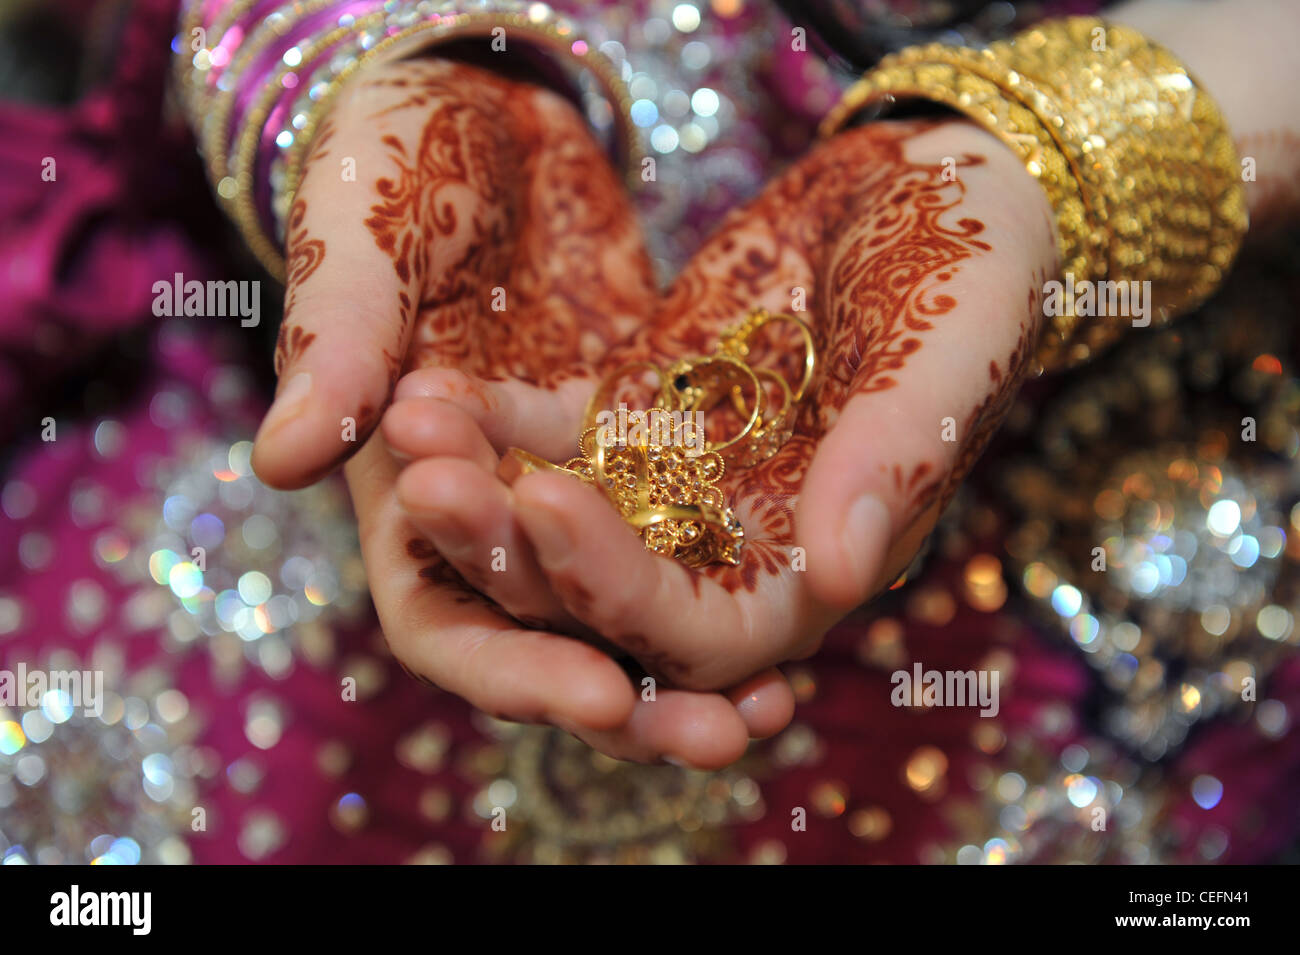 Ontario, Canada Pakistani Wedding by Qiu Photography | Post #4103